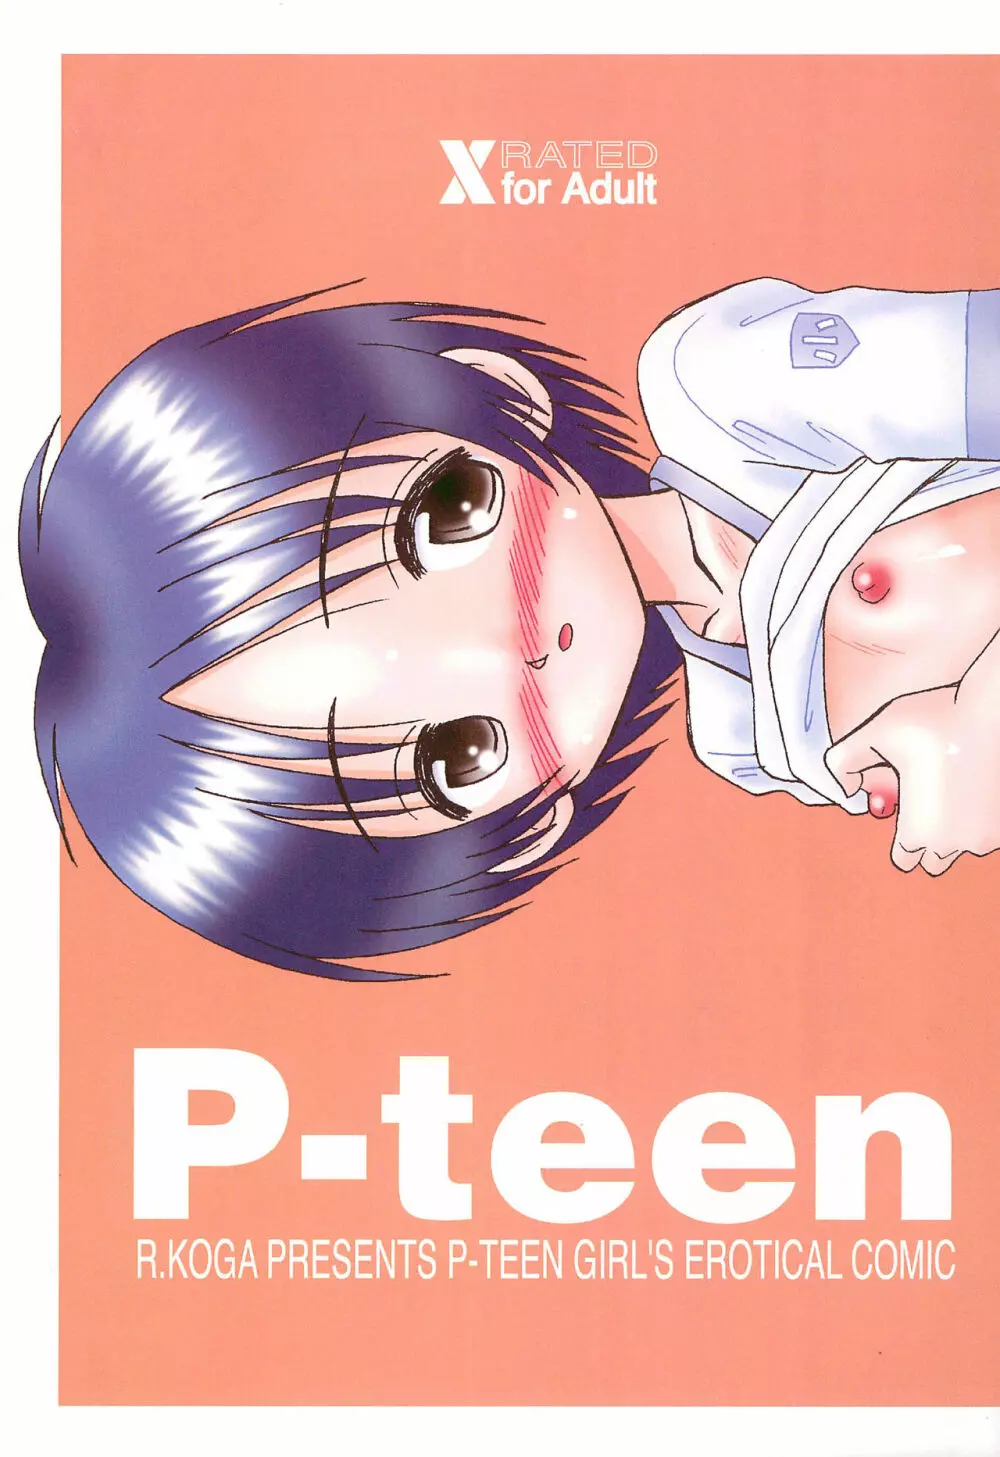 P-teen